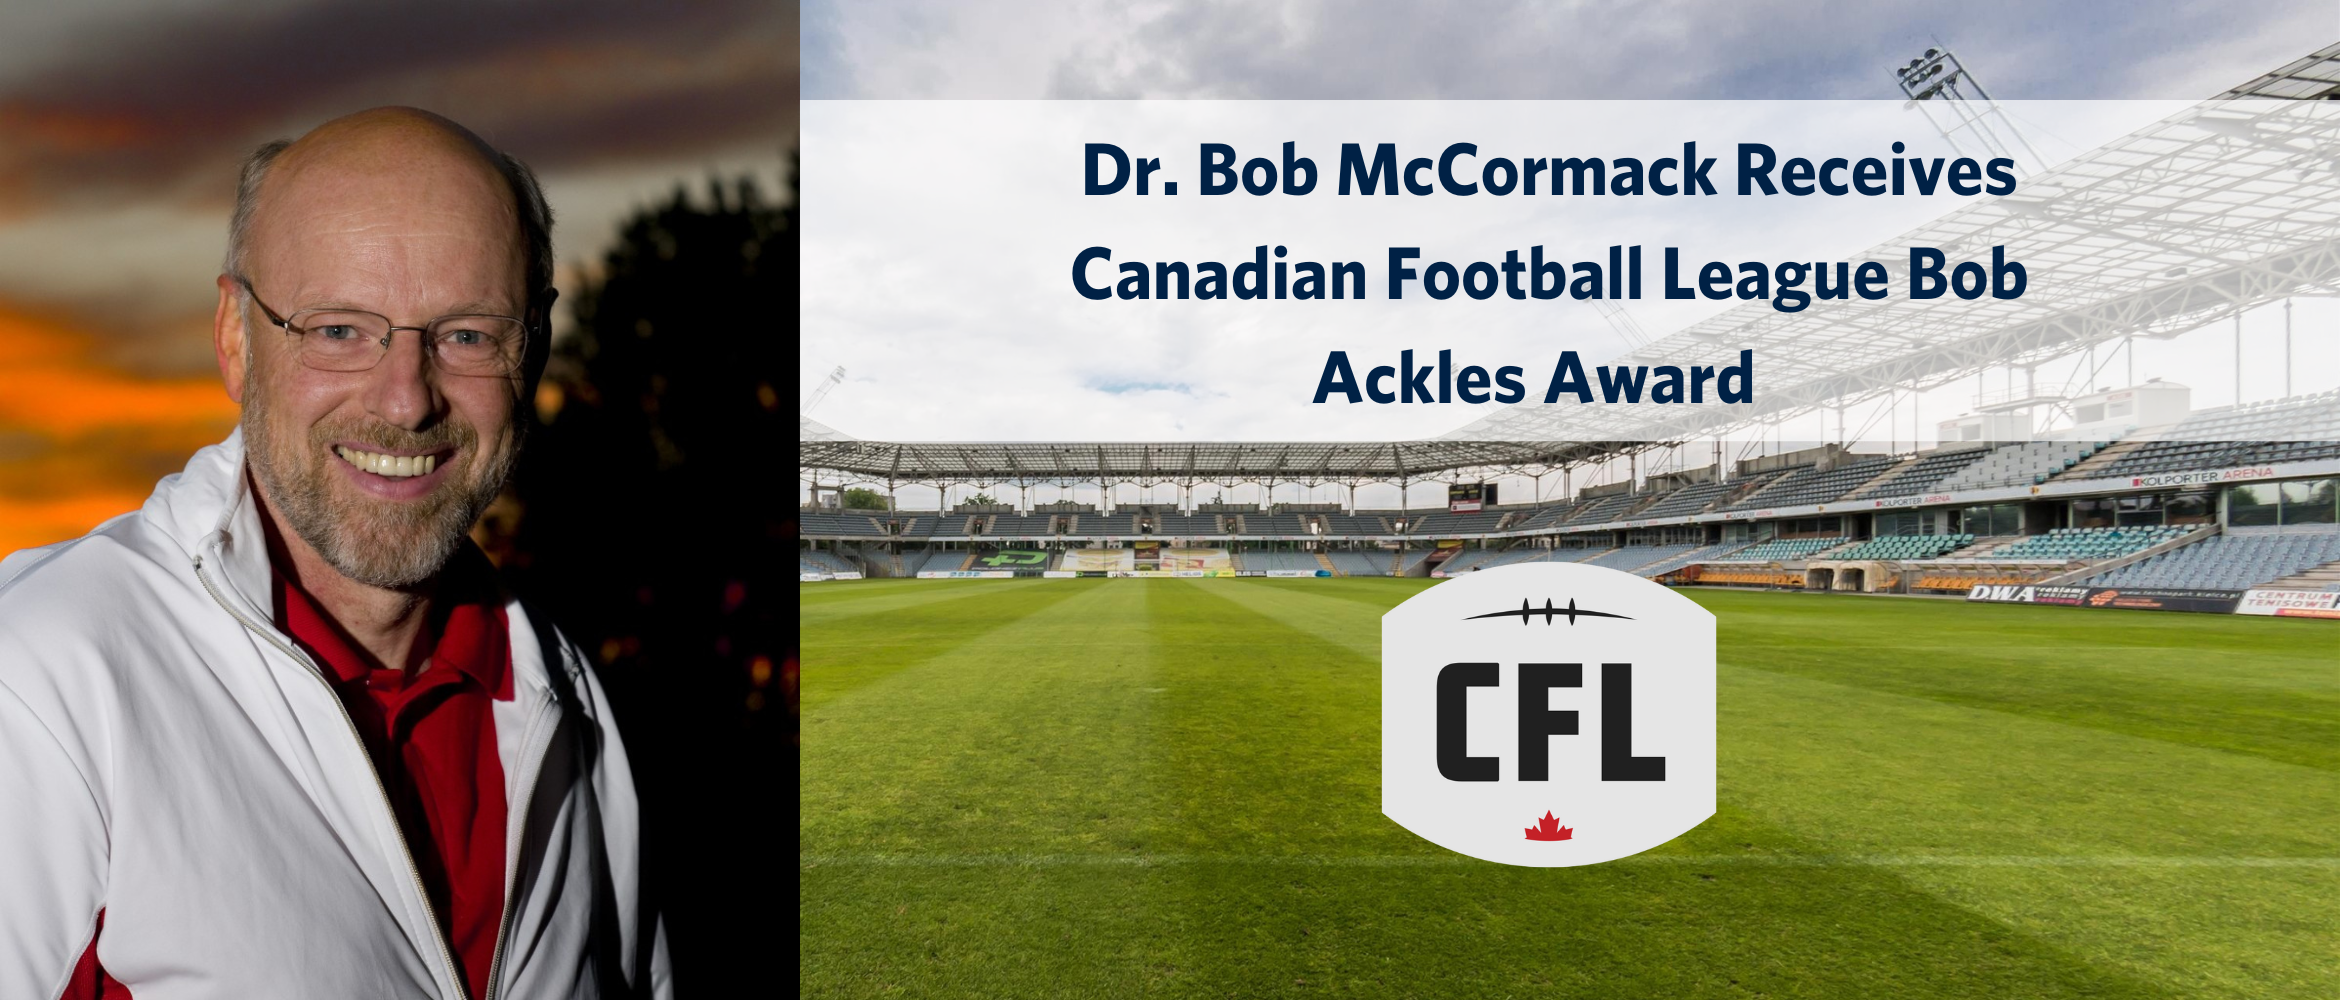 UBC Professor Dr. Bob McCormack Receives the Canadian Football League Bob Ackles Award